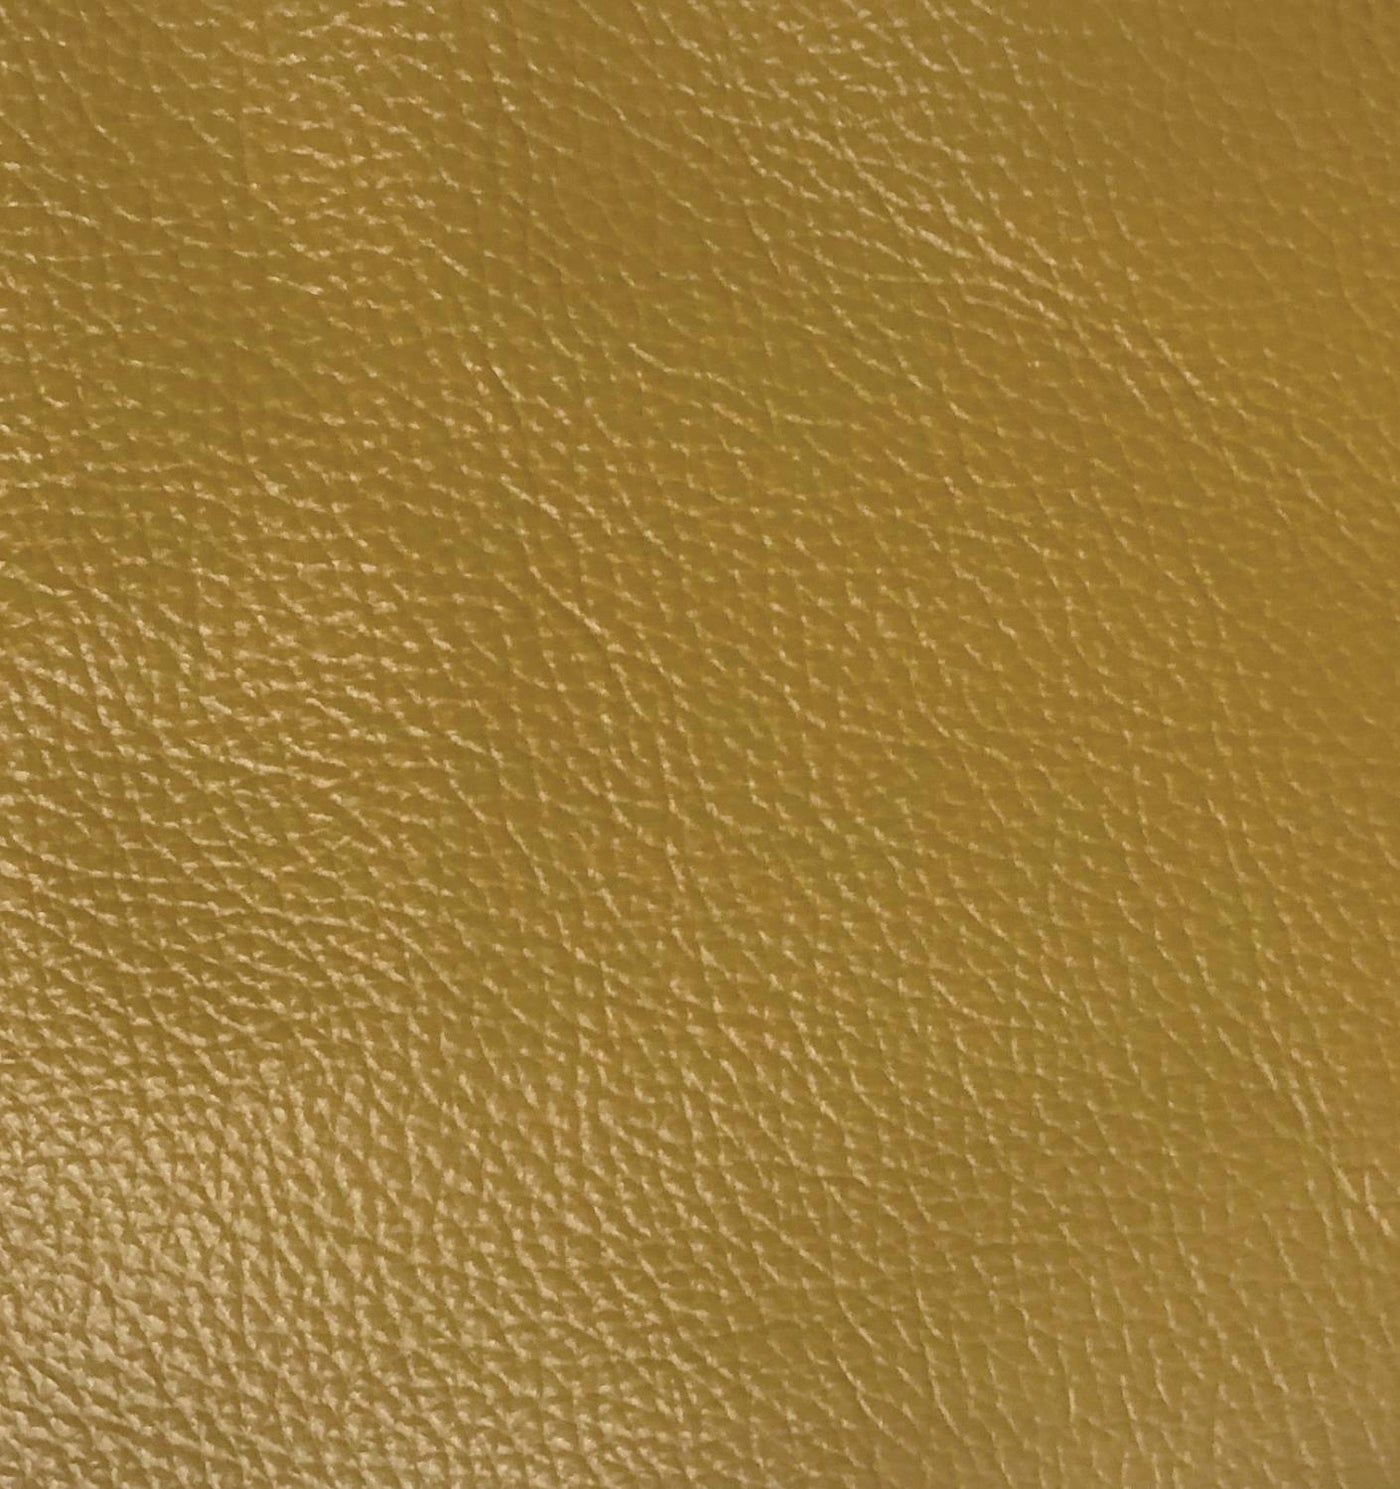 Jon Perse Leather Sofa - Mustard